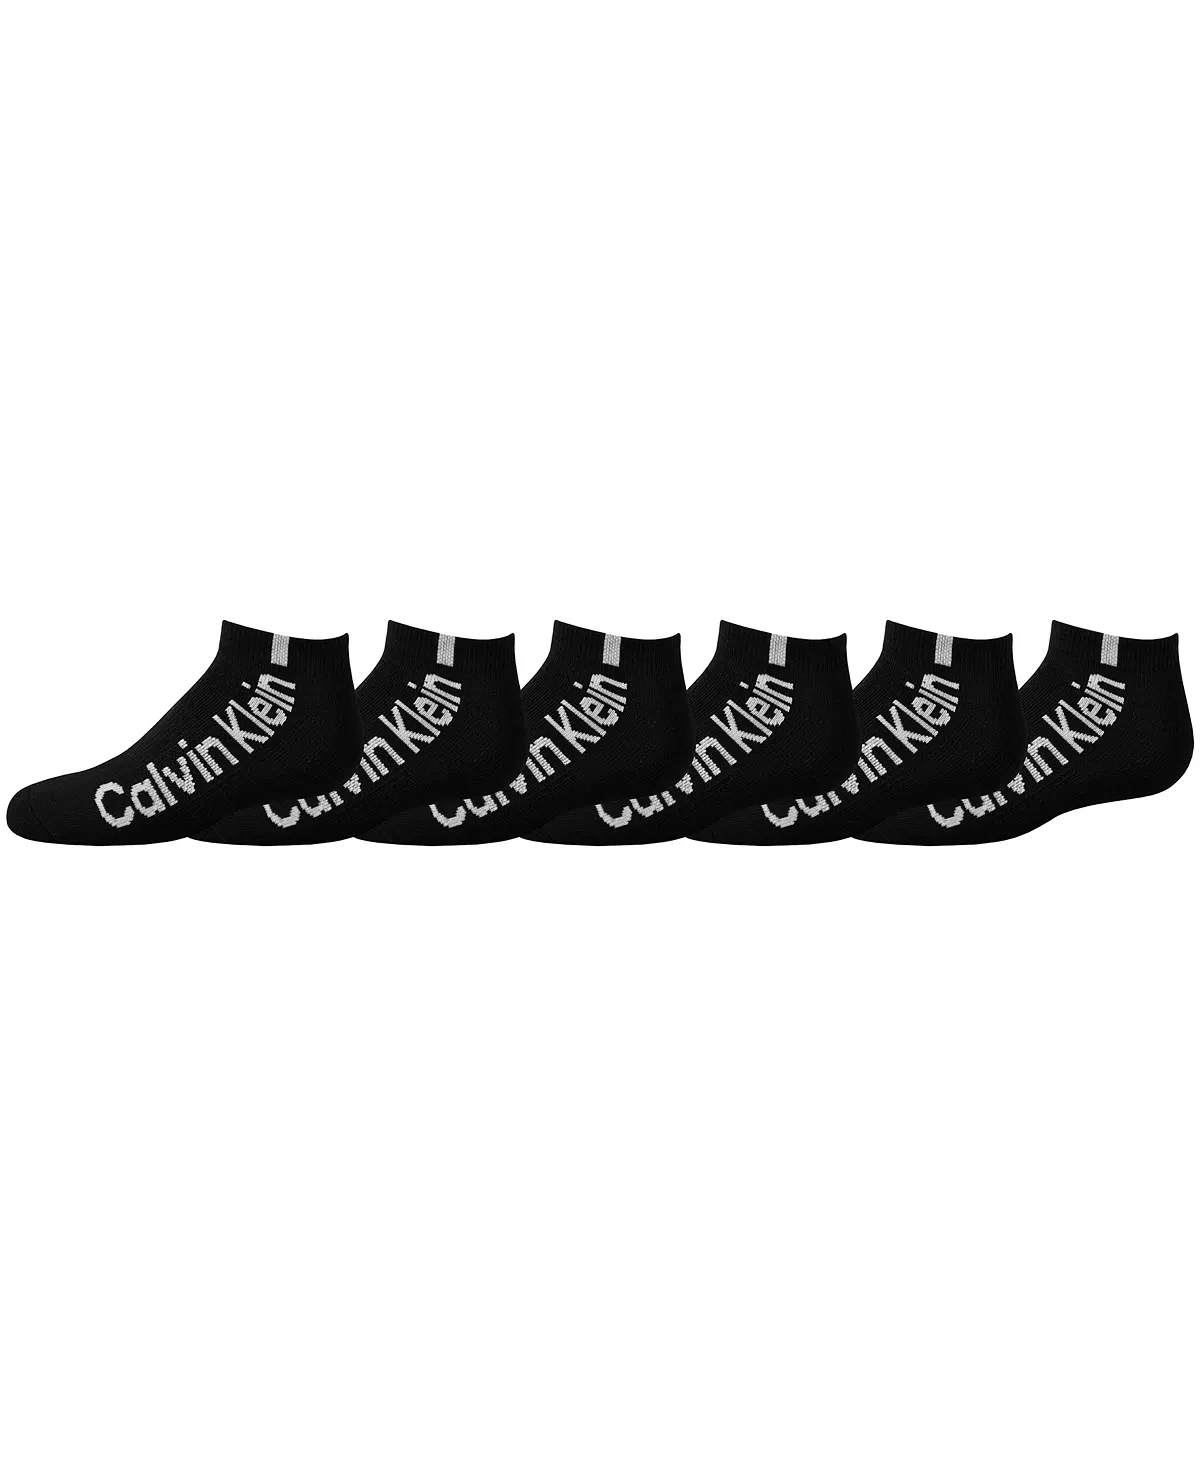 Calvin Klein Big Boys No Show Performance Socks, 6 Pack - Black Small 4-7